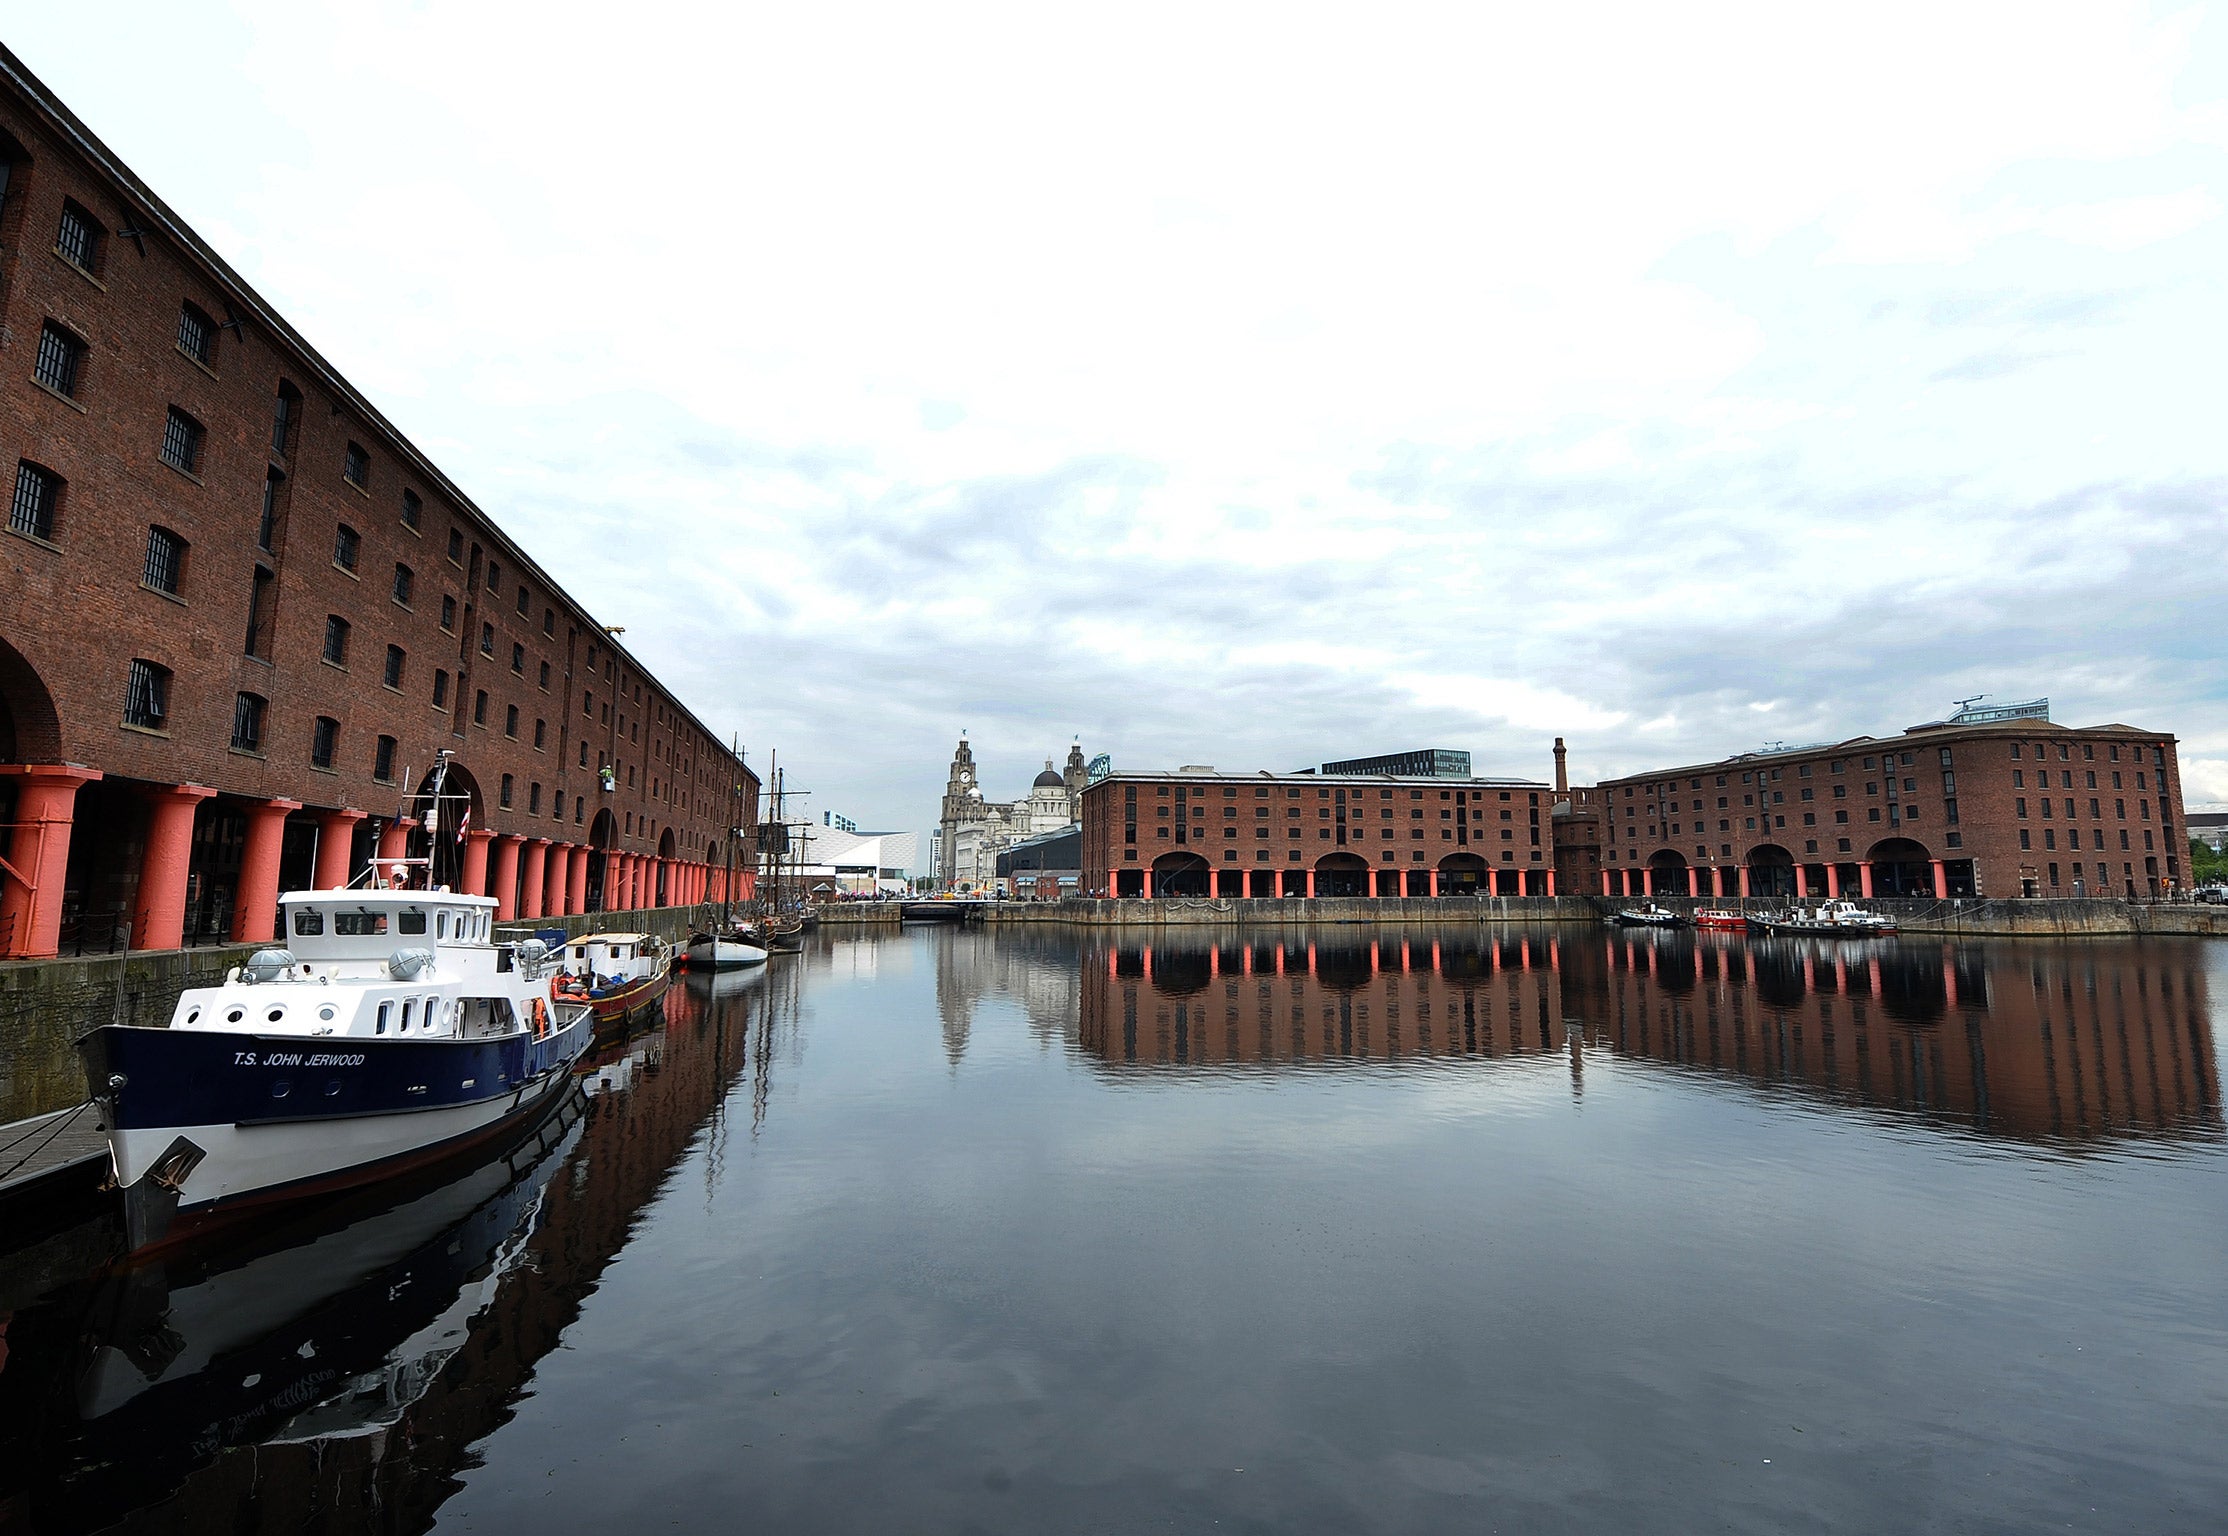 The famous Albert Docks in Liverpool